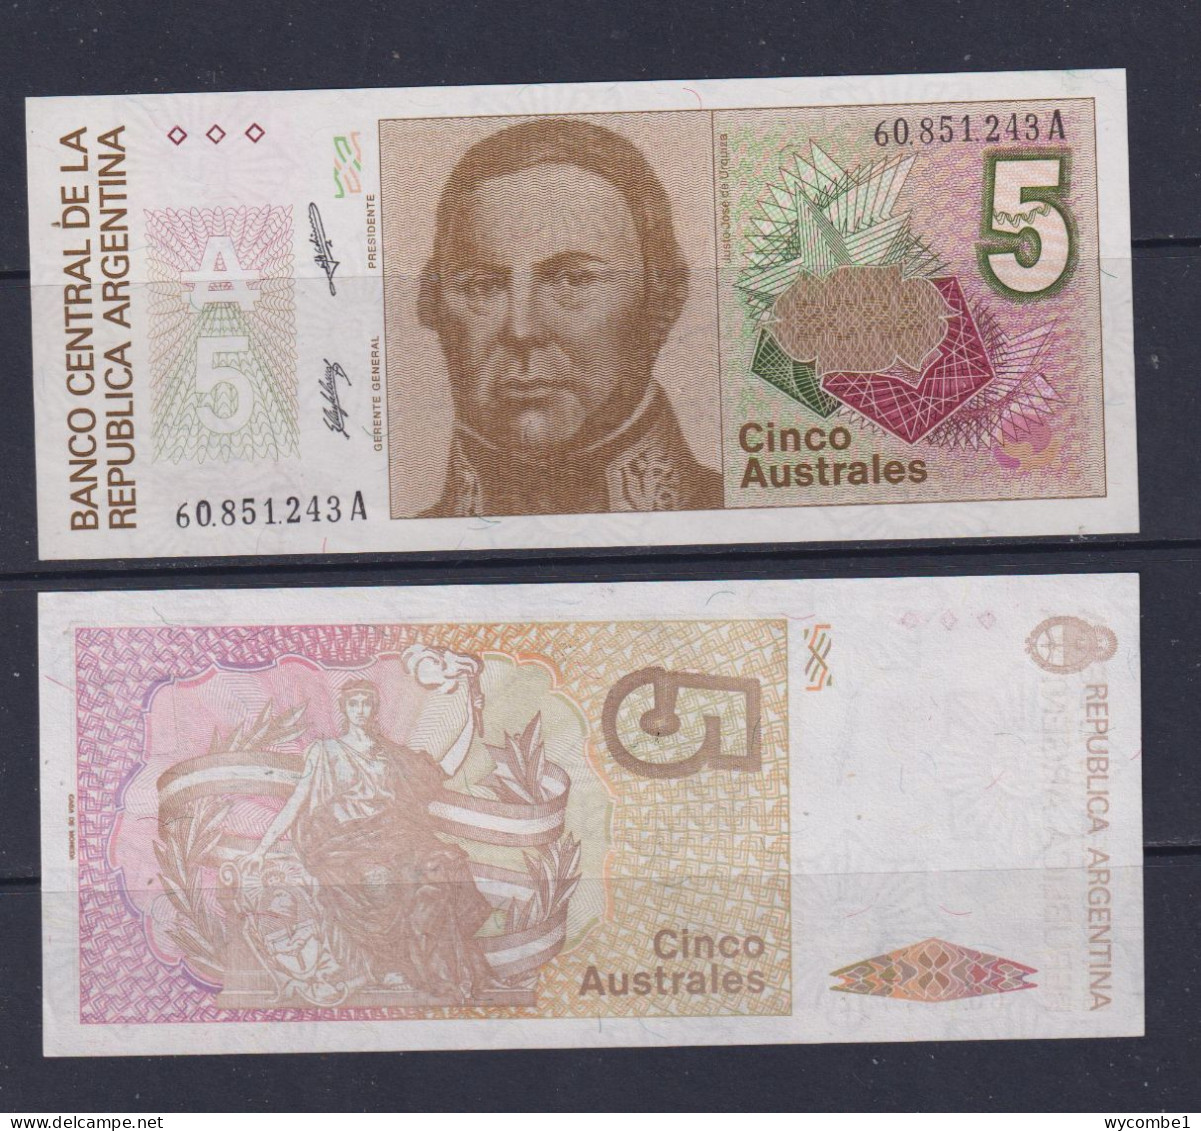 ARGENTINA  -  1985-89 5 Australes  UNC/aUNC  Banknote - Argentine